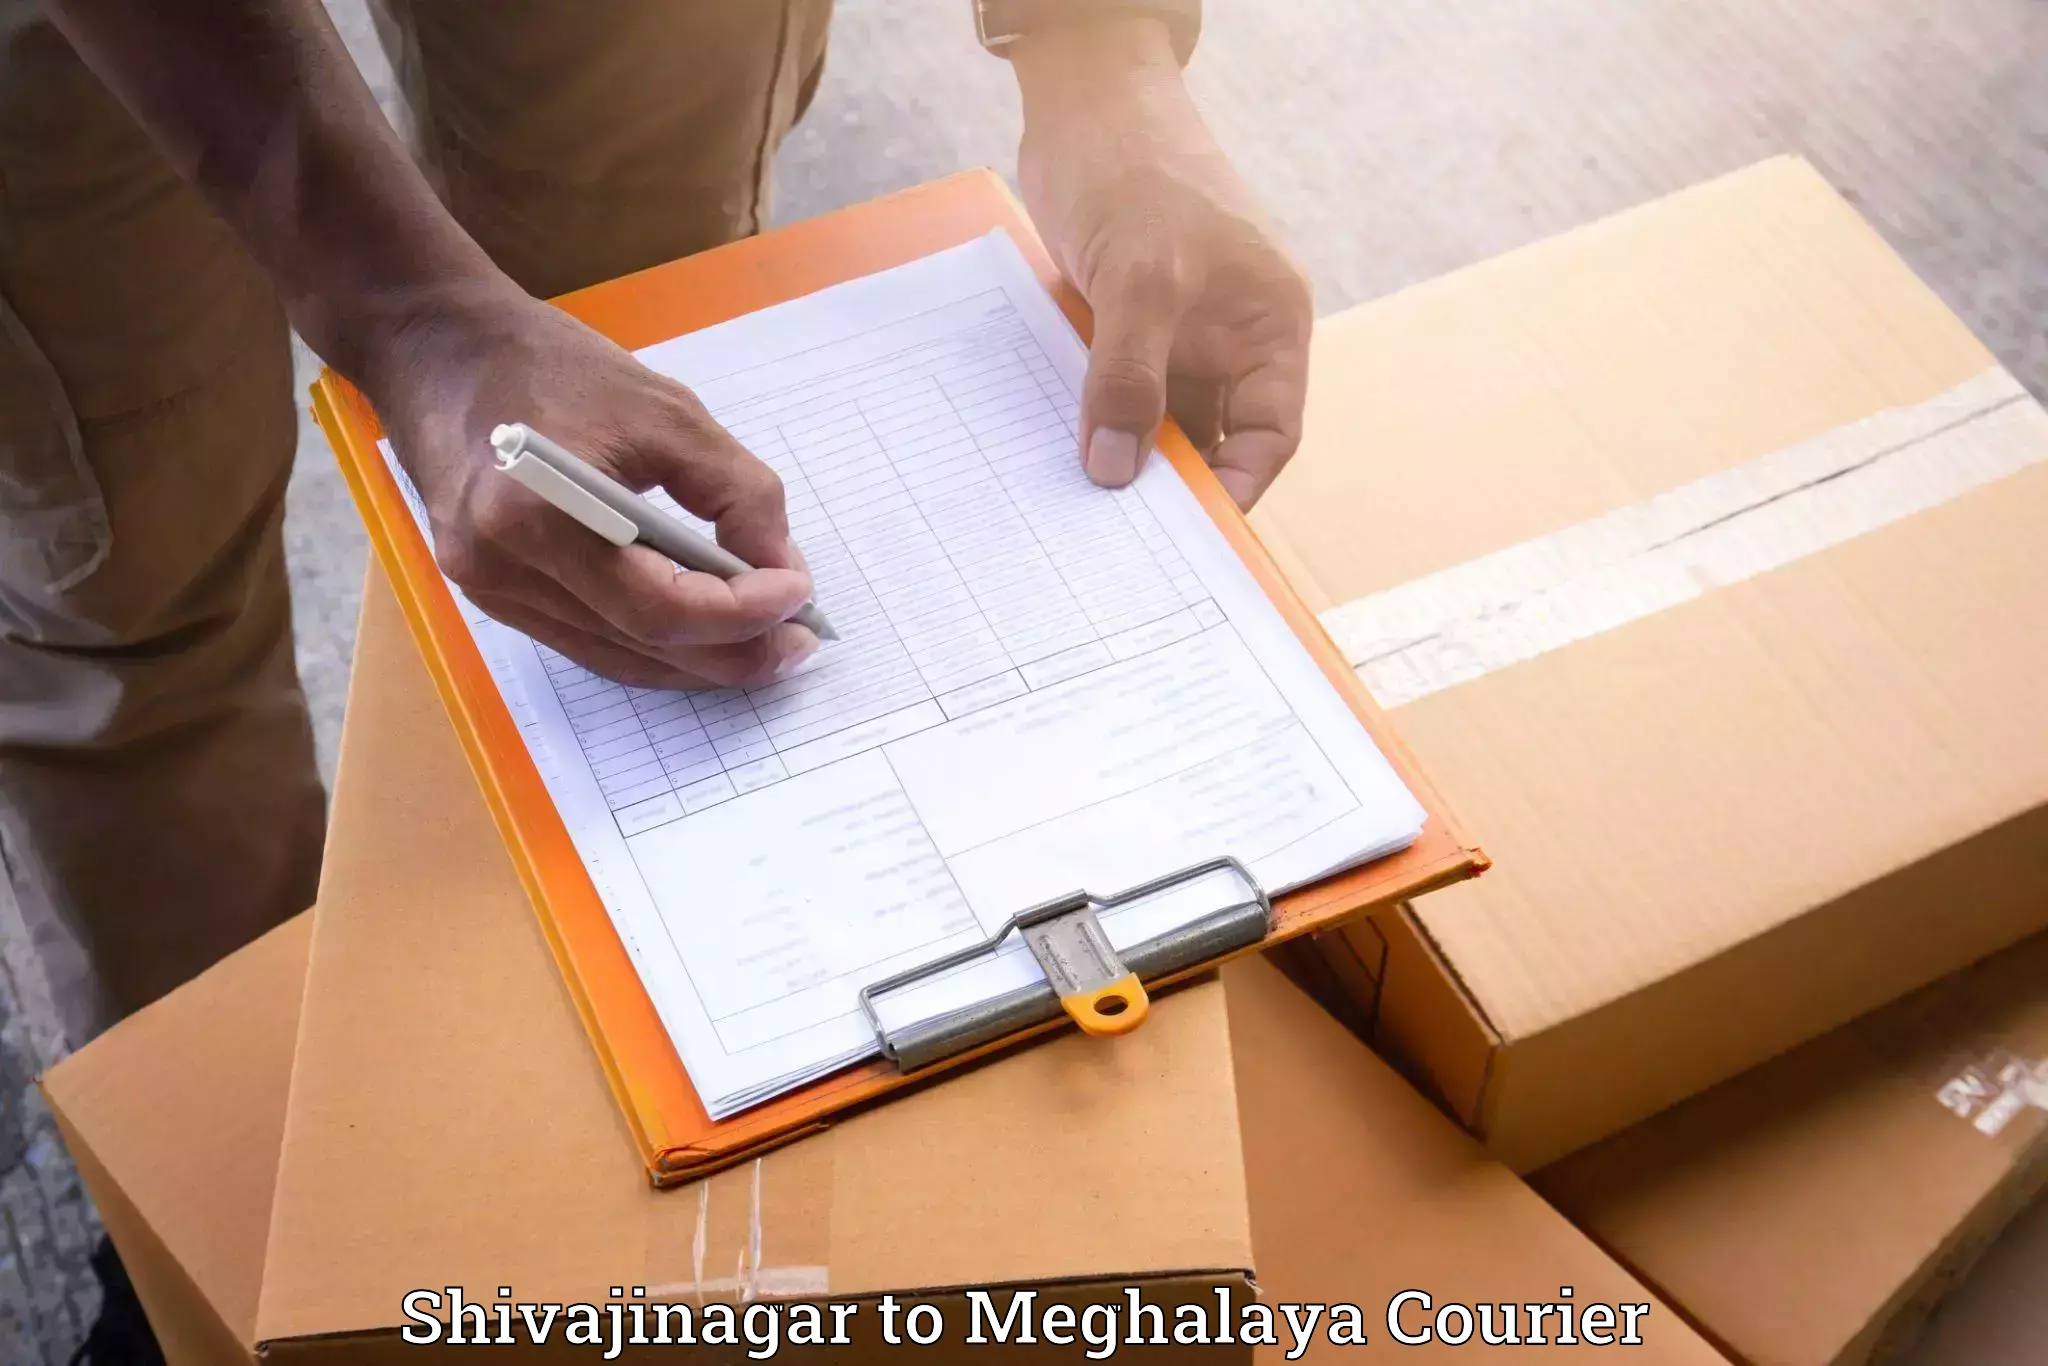 Professional moving company Shivajinagar to Meghalaya